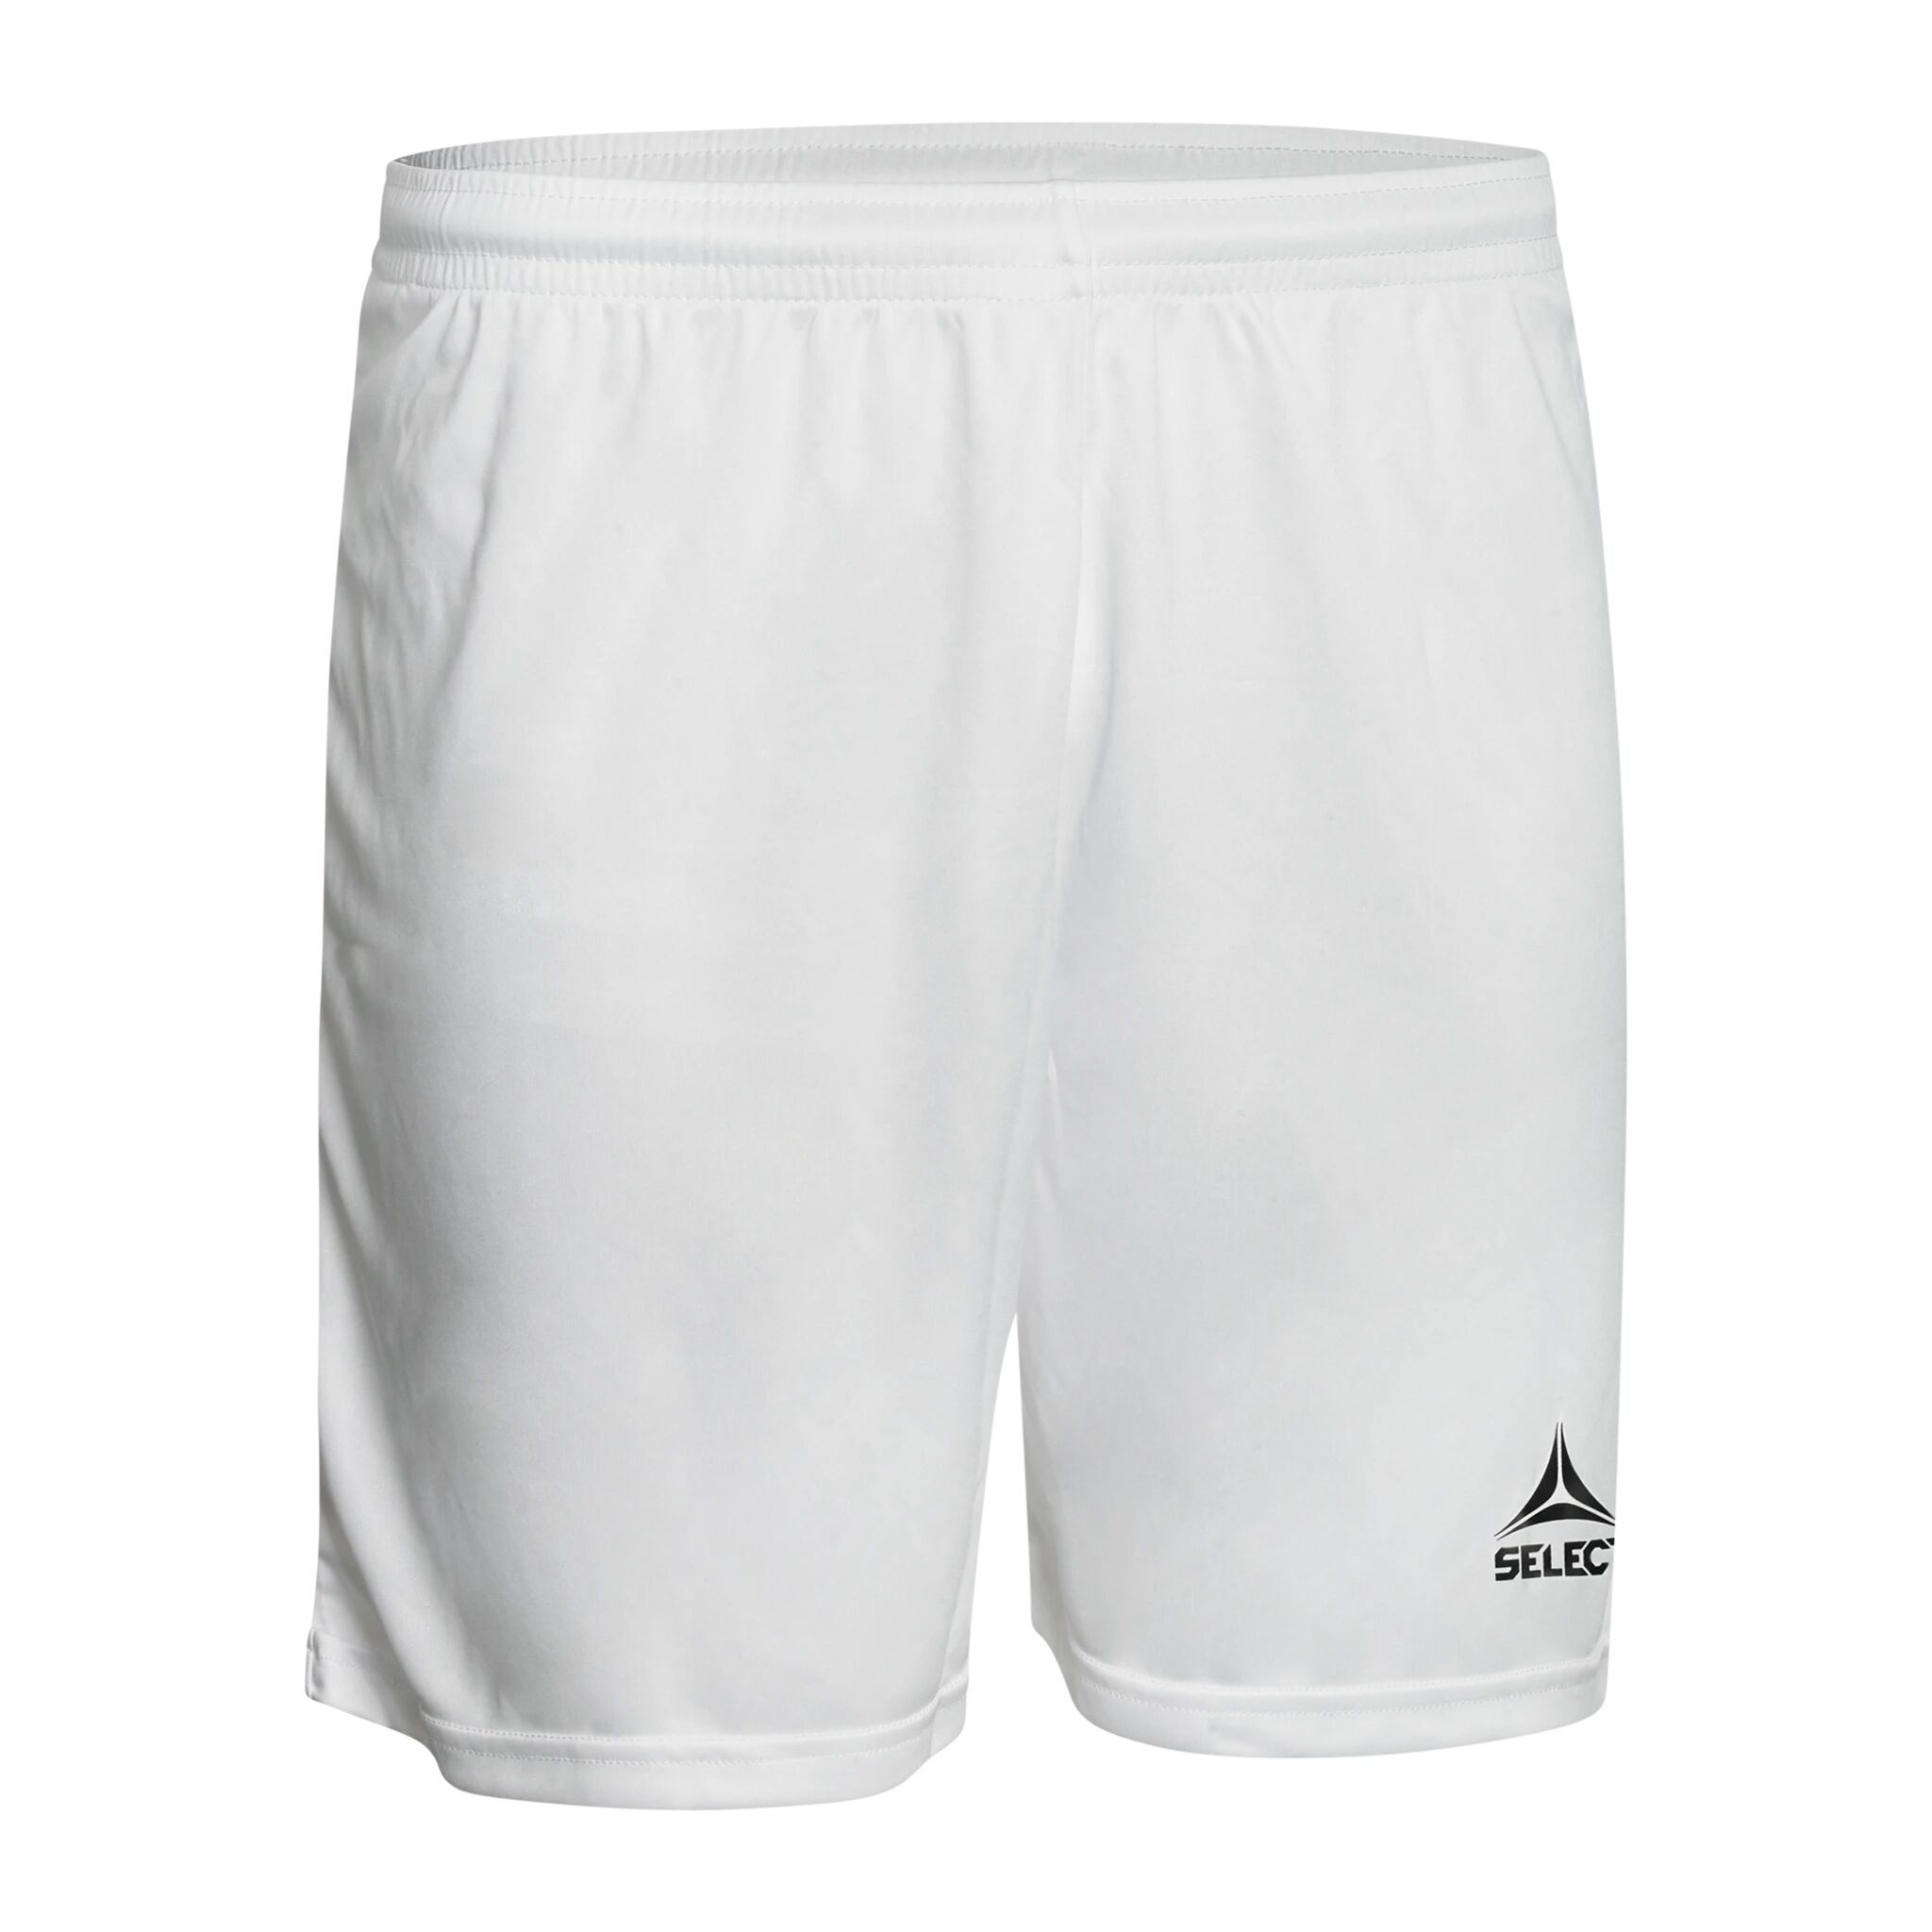 Select Player shorts Pisa, shorts senior M White